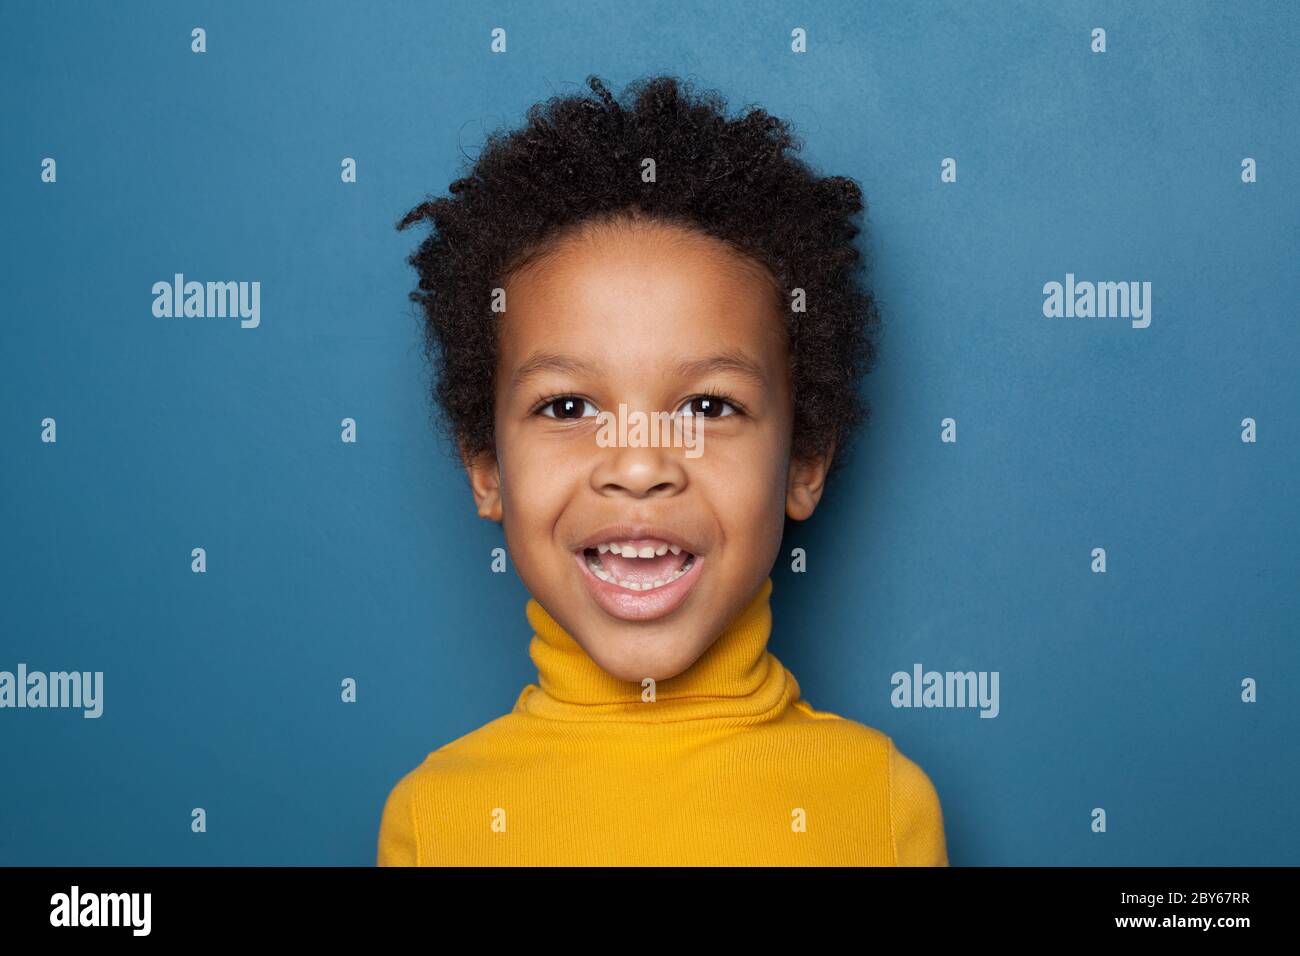 Surprised black kid boy on blue background Stock Photo